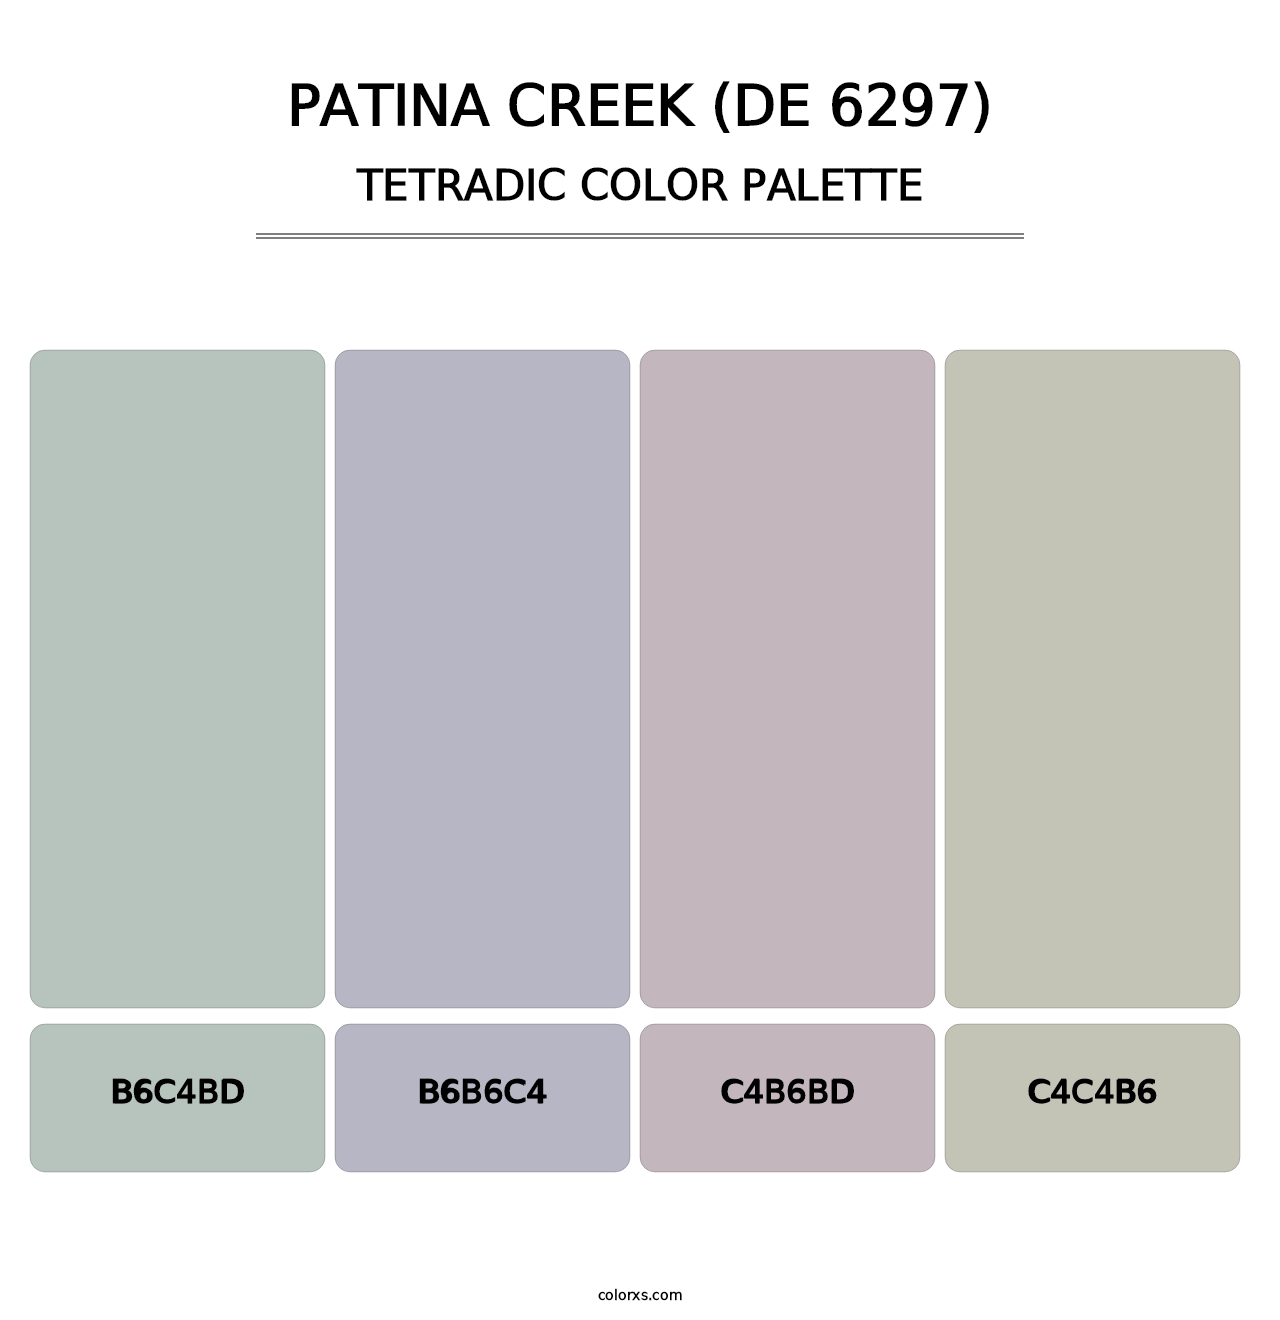 Patina Creek (DE 6297) - Tetradic Color Palette